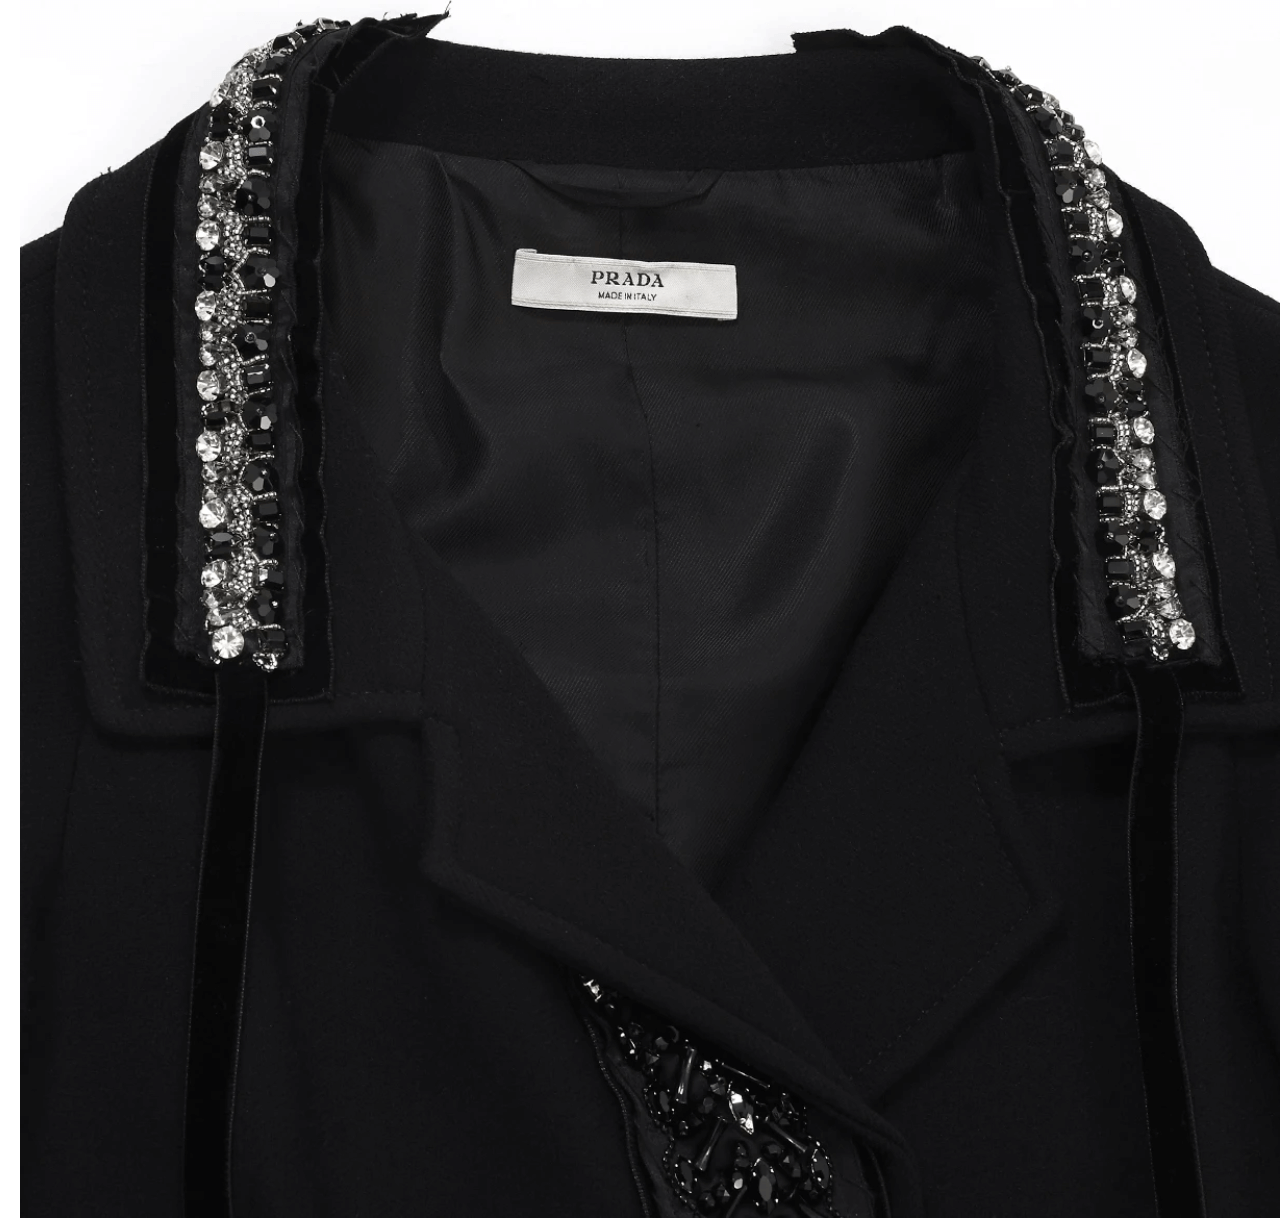 prada black coat, wool with jewellery, size 38.